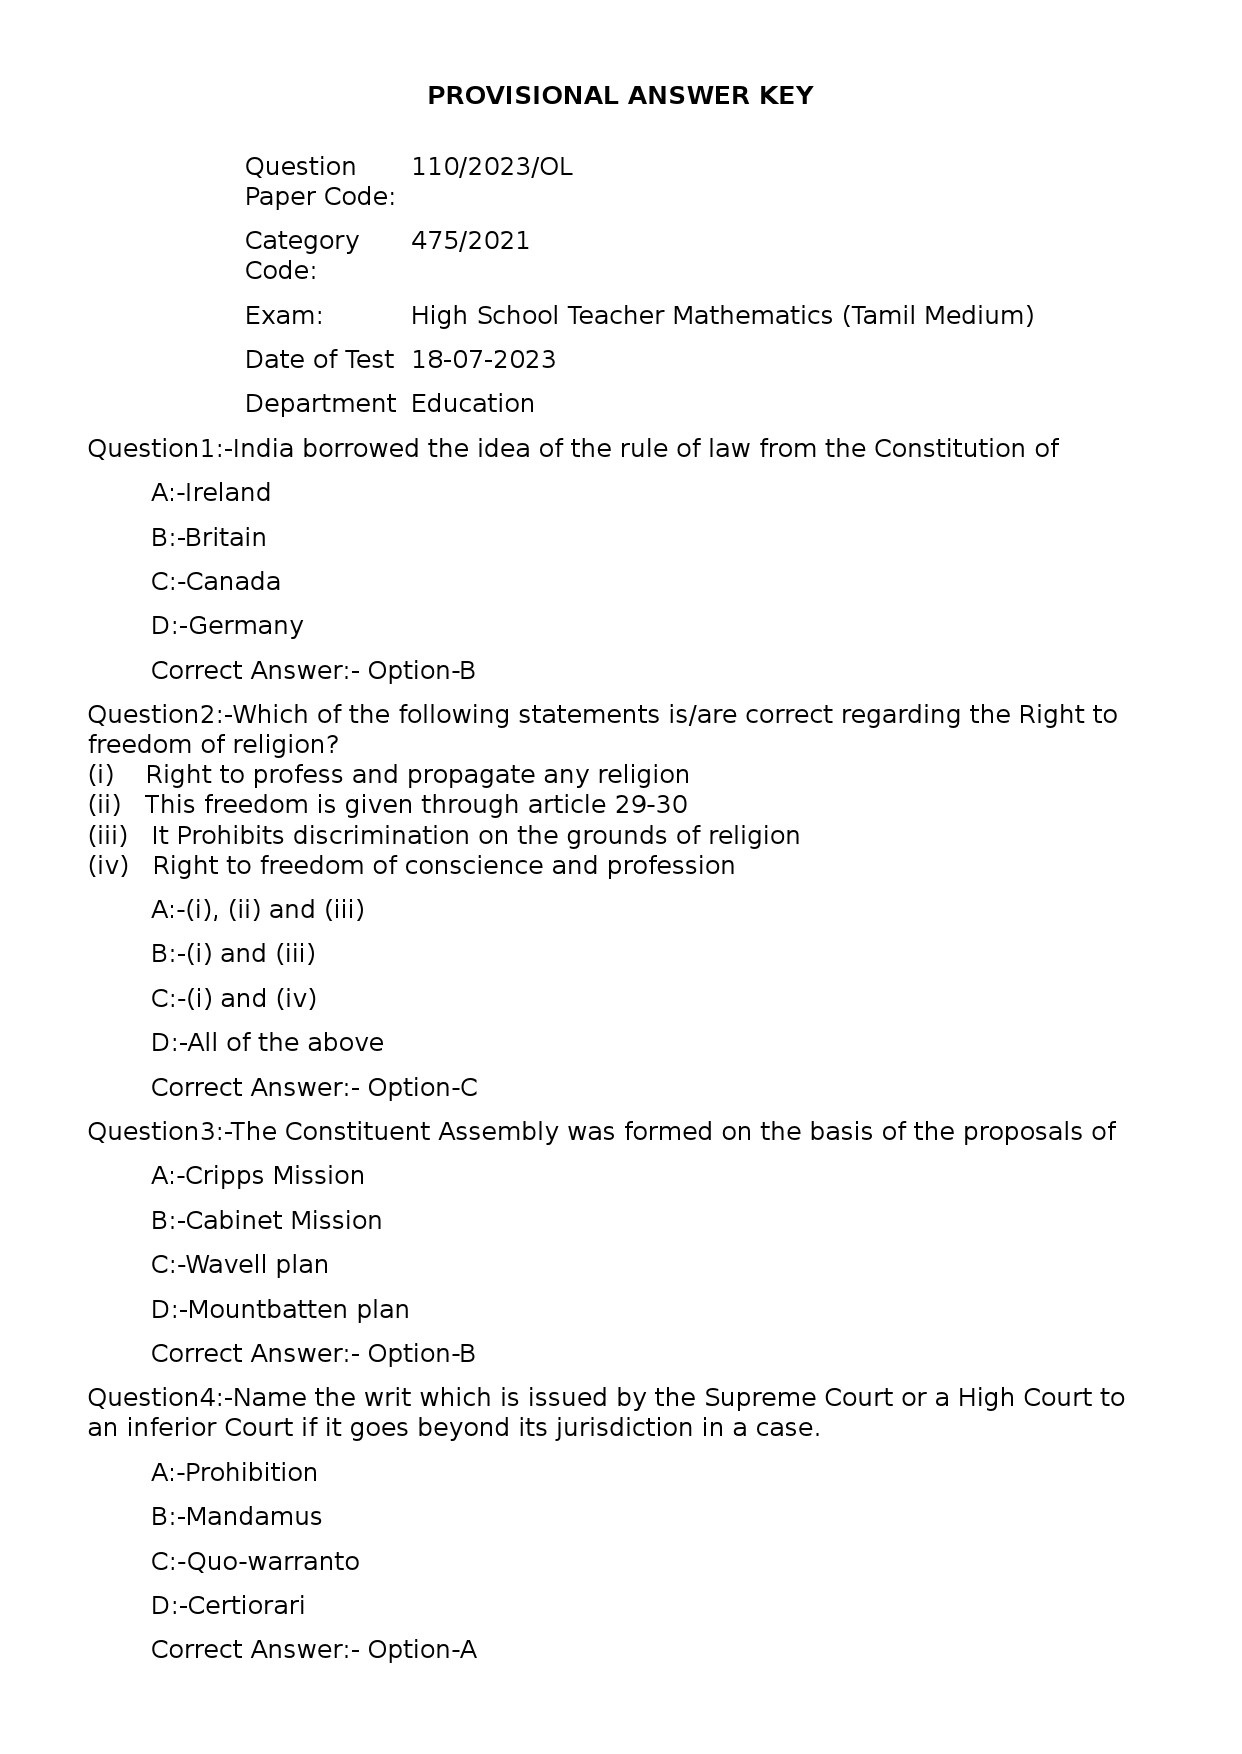 KPSC High School Teacher Mathematics Tamil Medium Exam 2023 Code 1102023OL 1